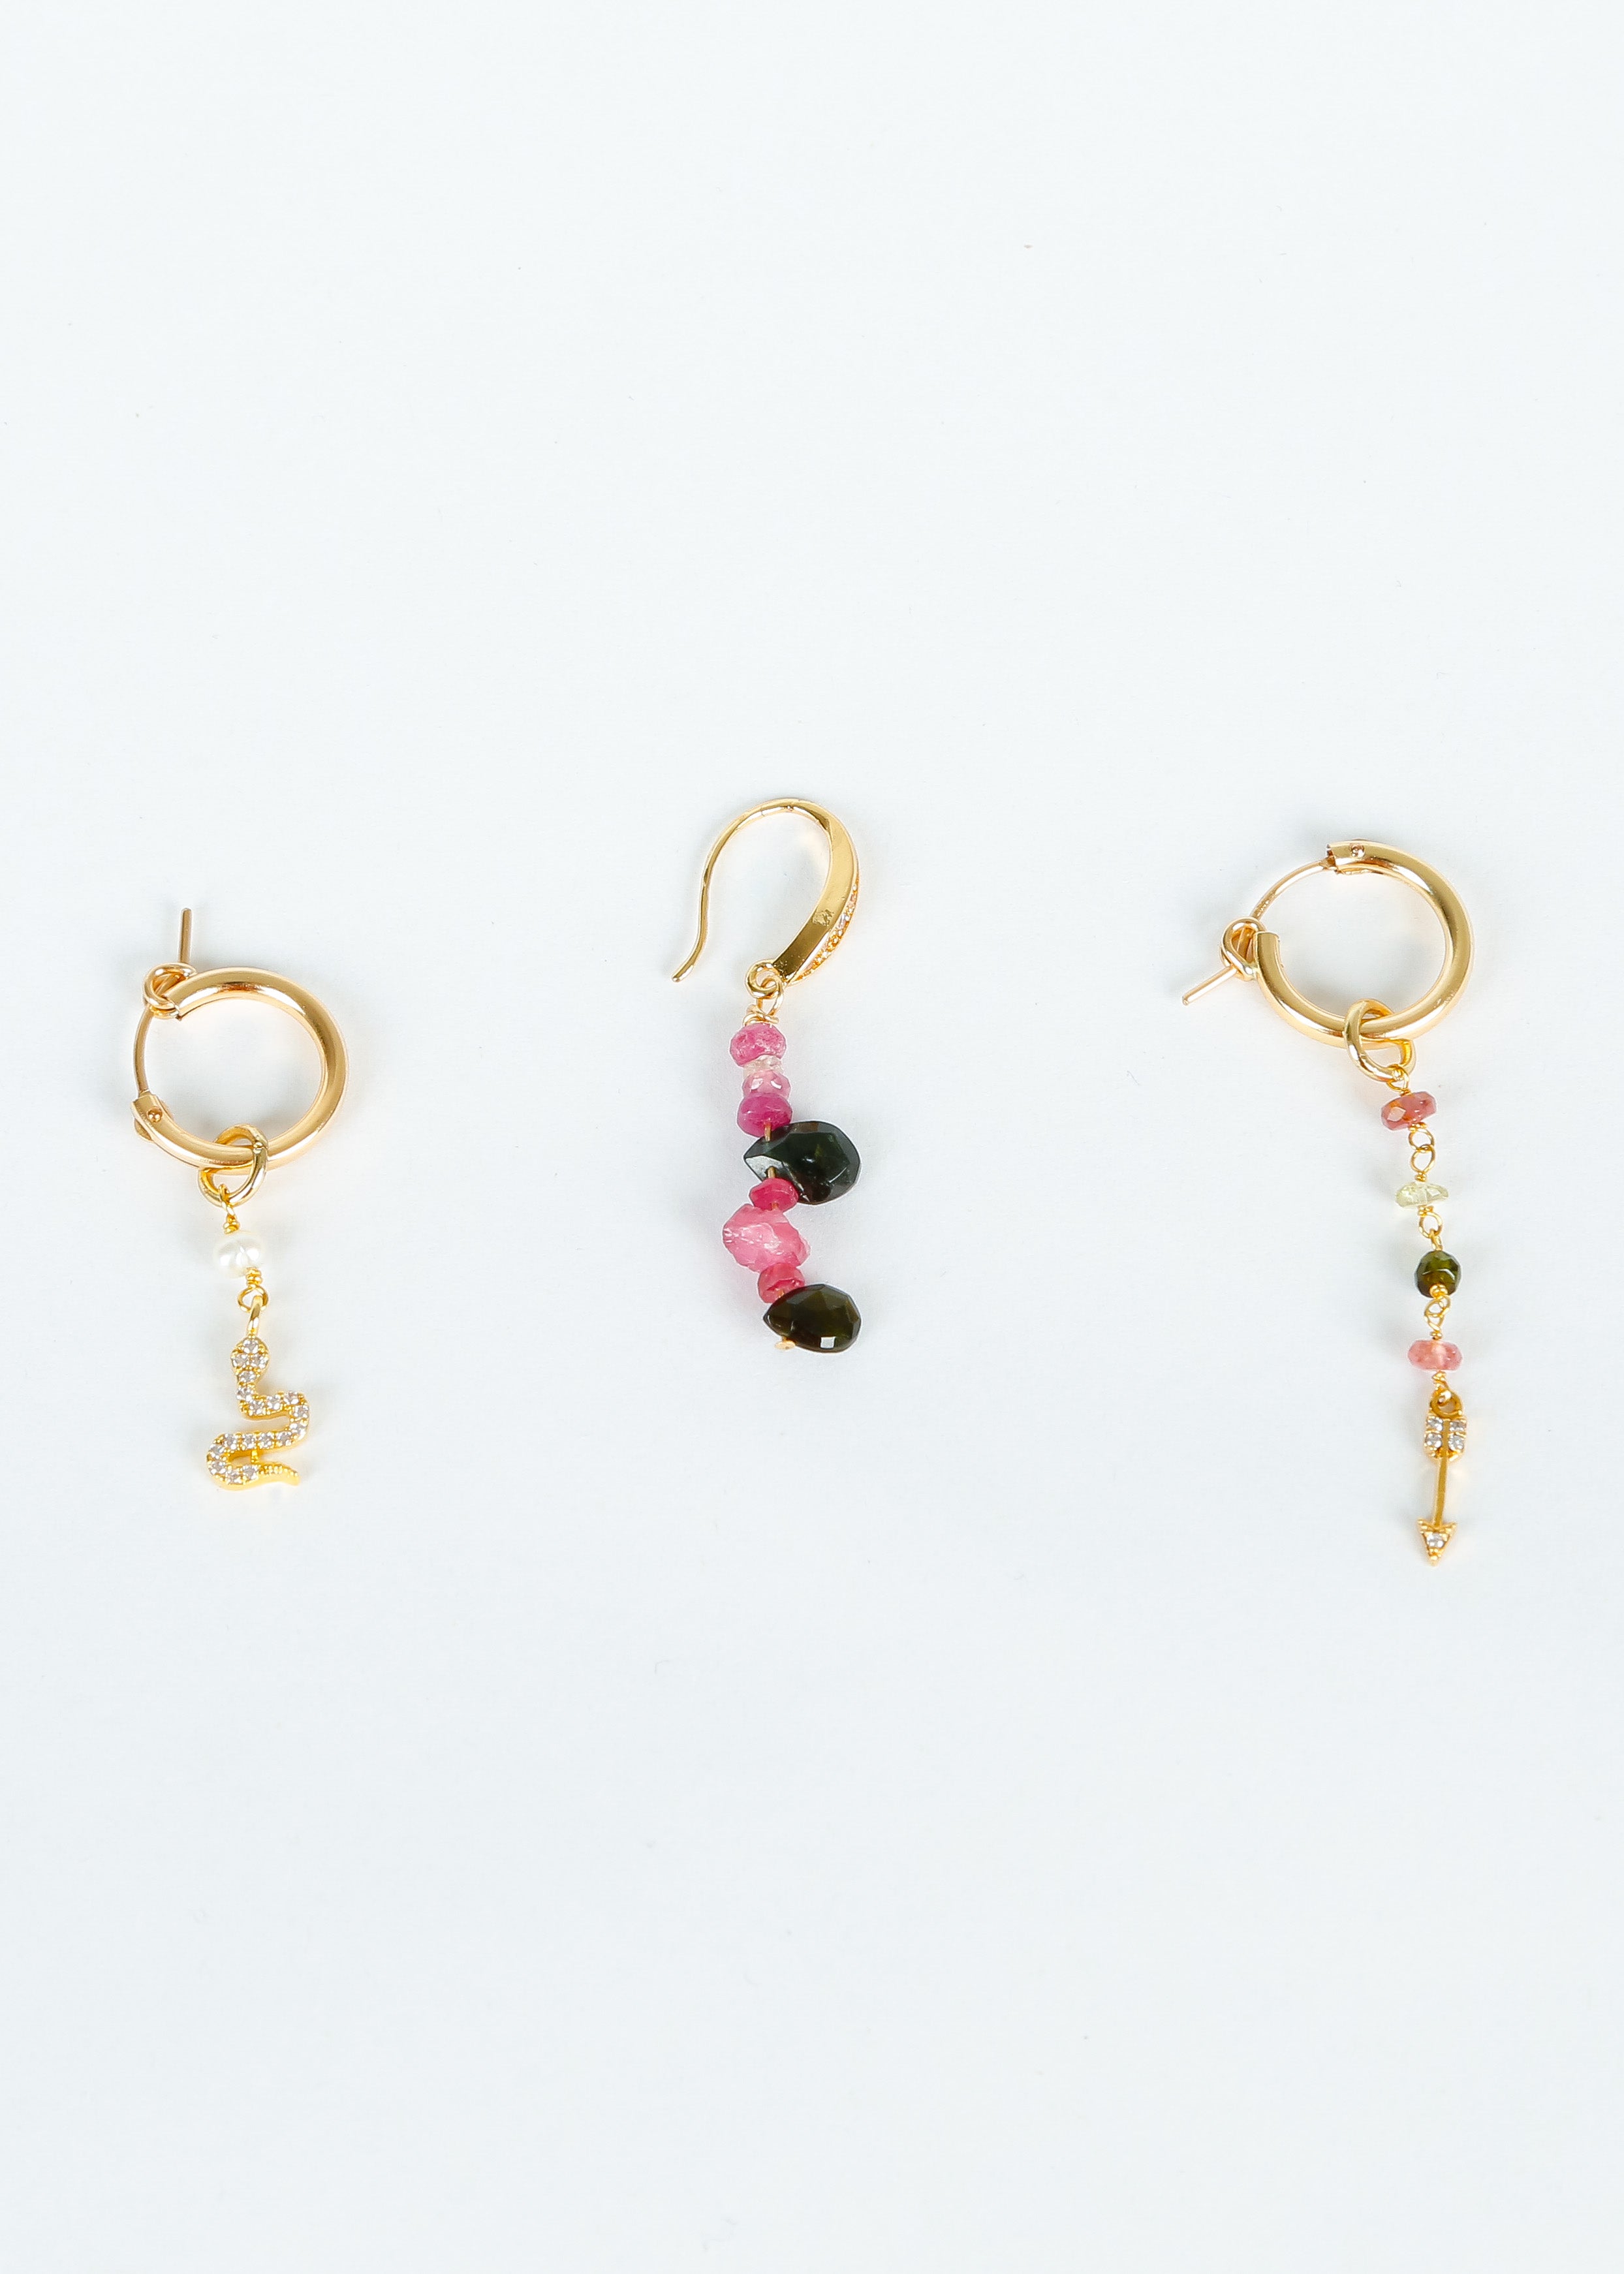 ZOI Higia Earrings in Sapphire Rose, Tourmaline